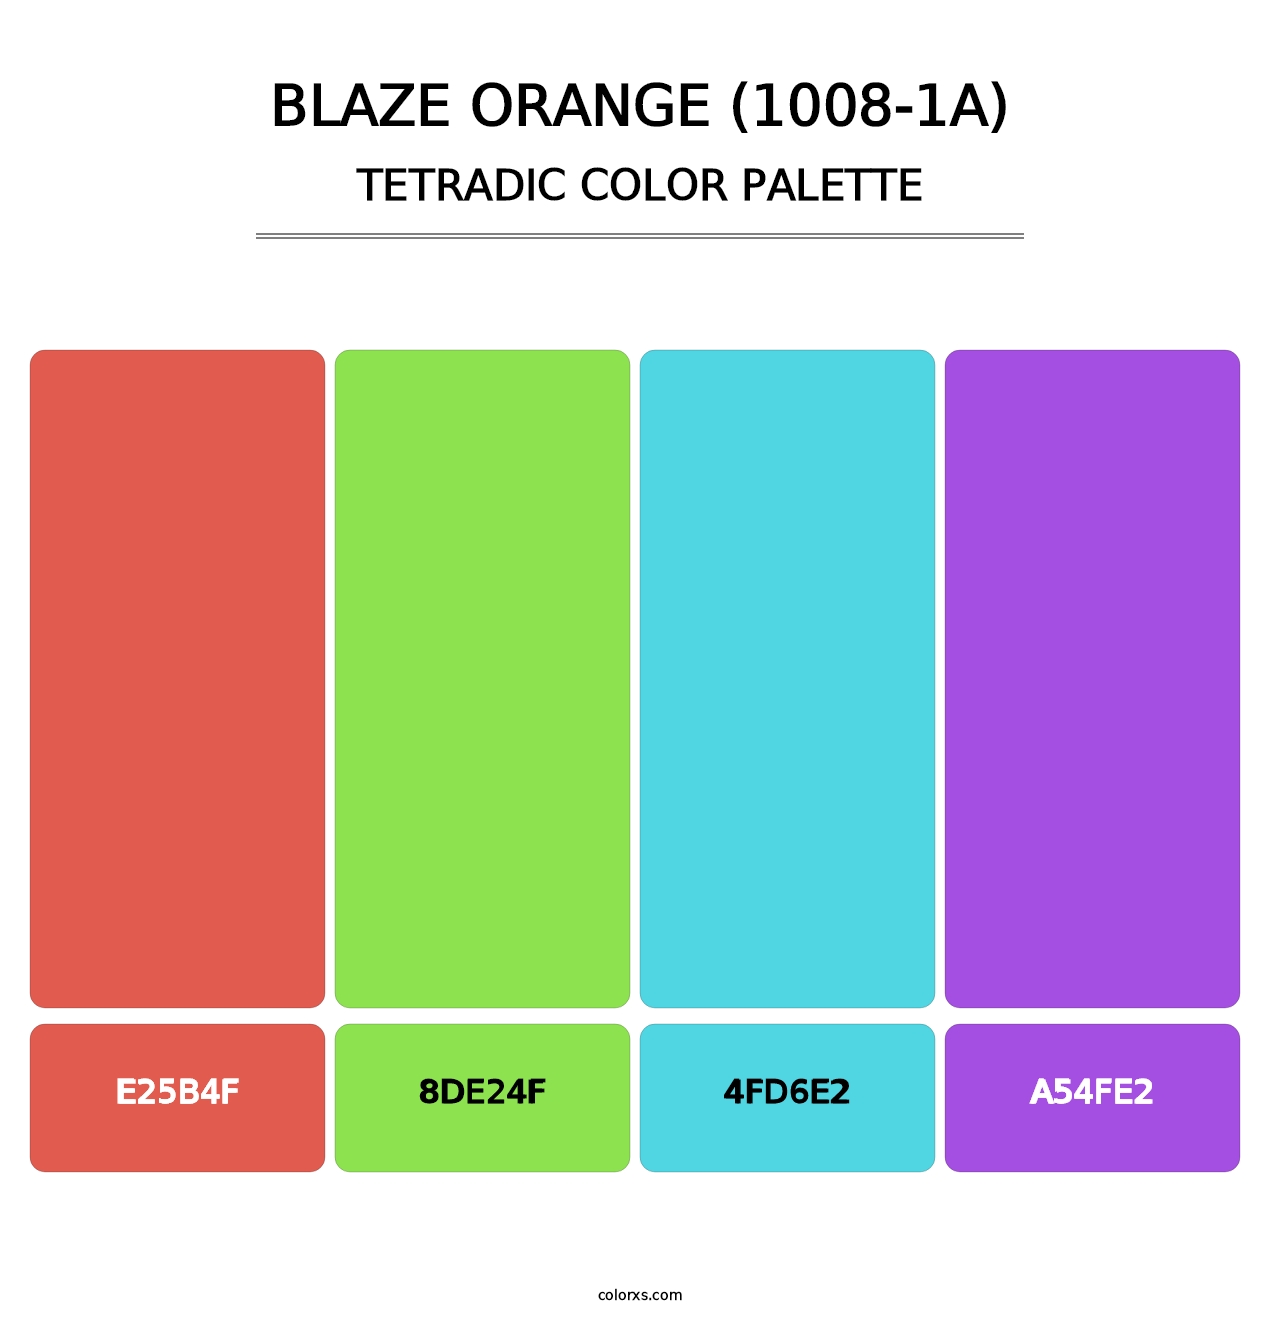 Blaze Orange (1008-1A) - Tetradic Color Palette